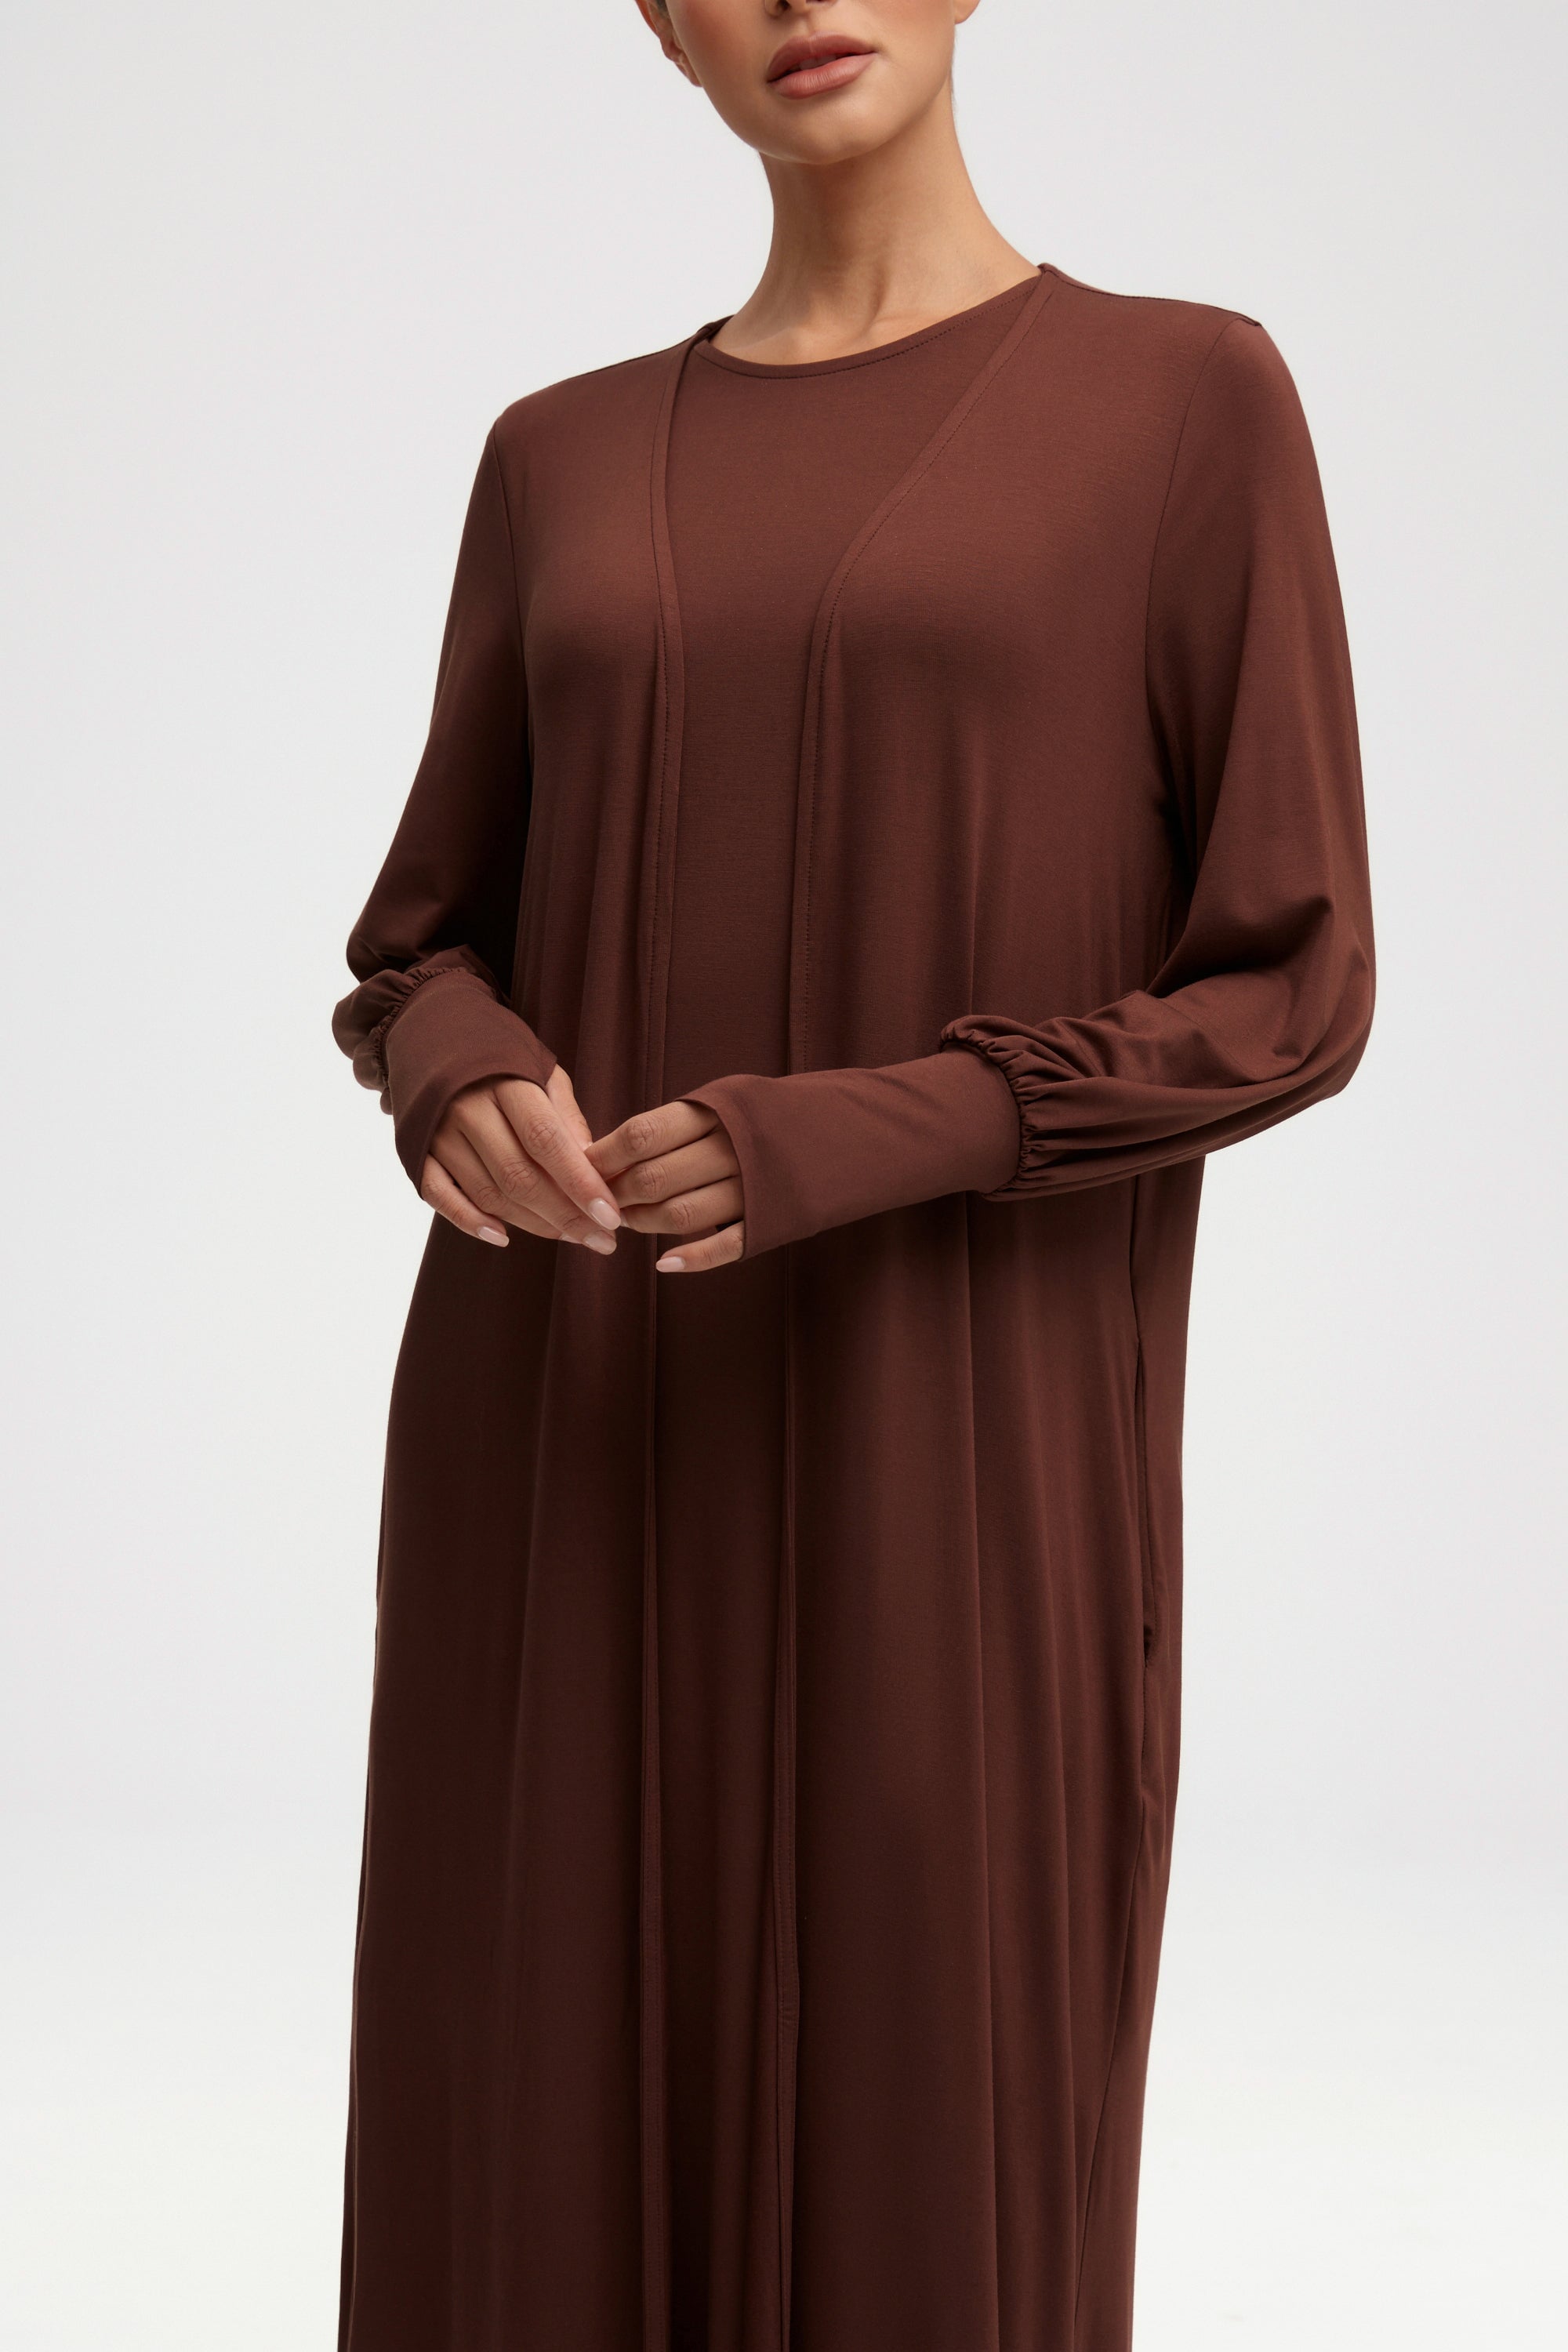 Jenin Jersey Open Abaya - Chocolate Clothing Veiled 